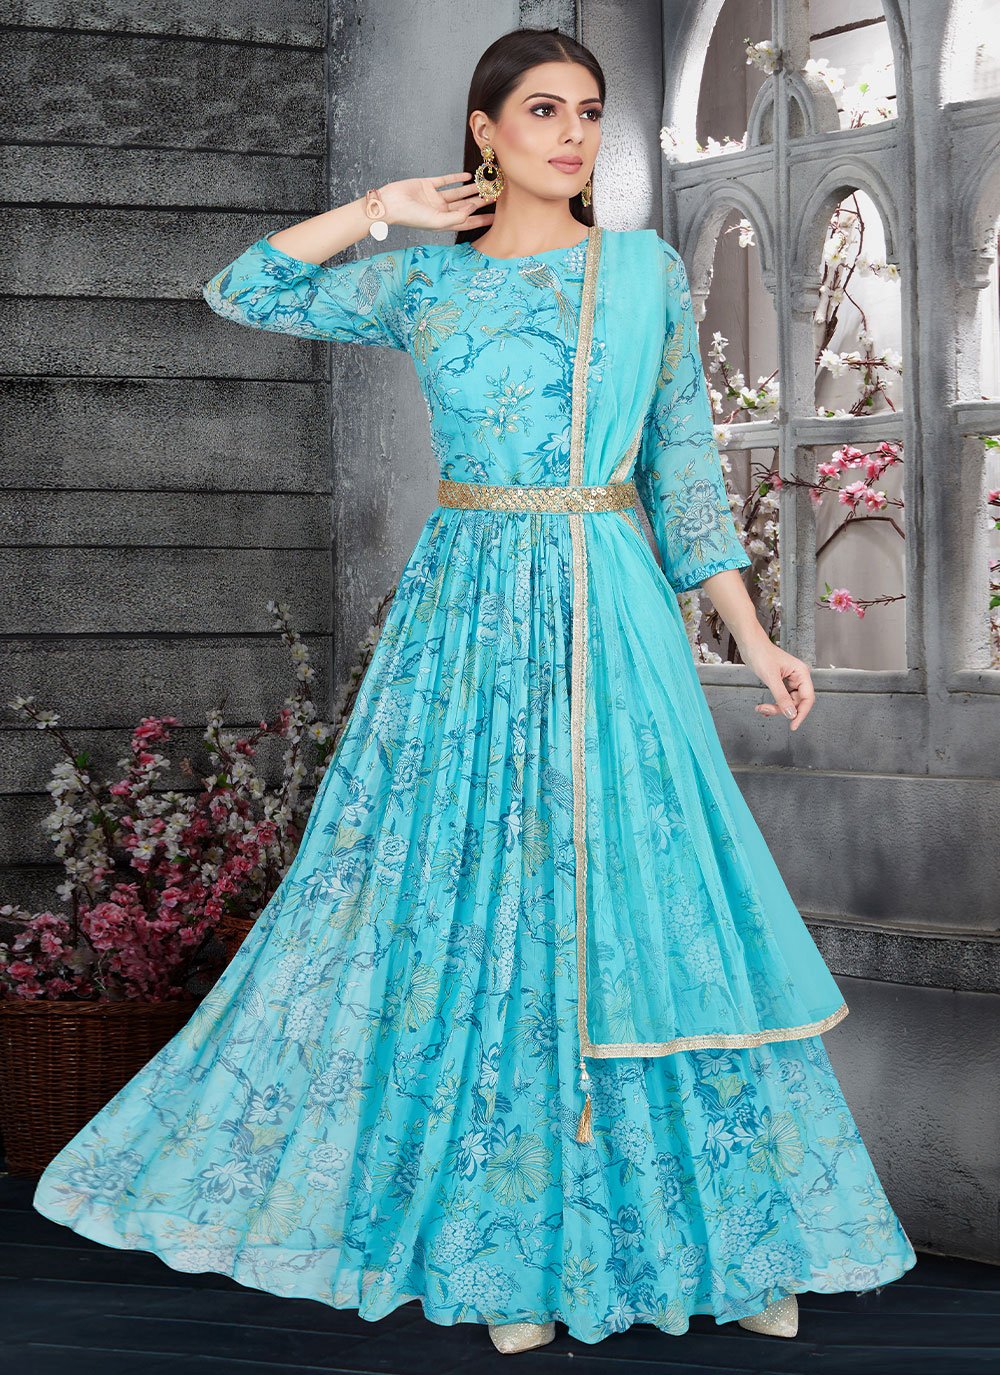 Plain Georgette Stylish Party Wear Long Dress at Rs 750/piece in Dehradun |  ID: 2850756431155